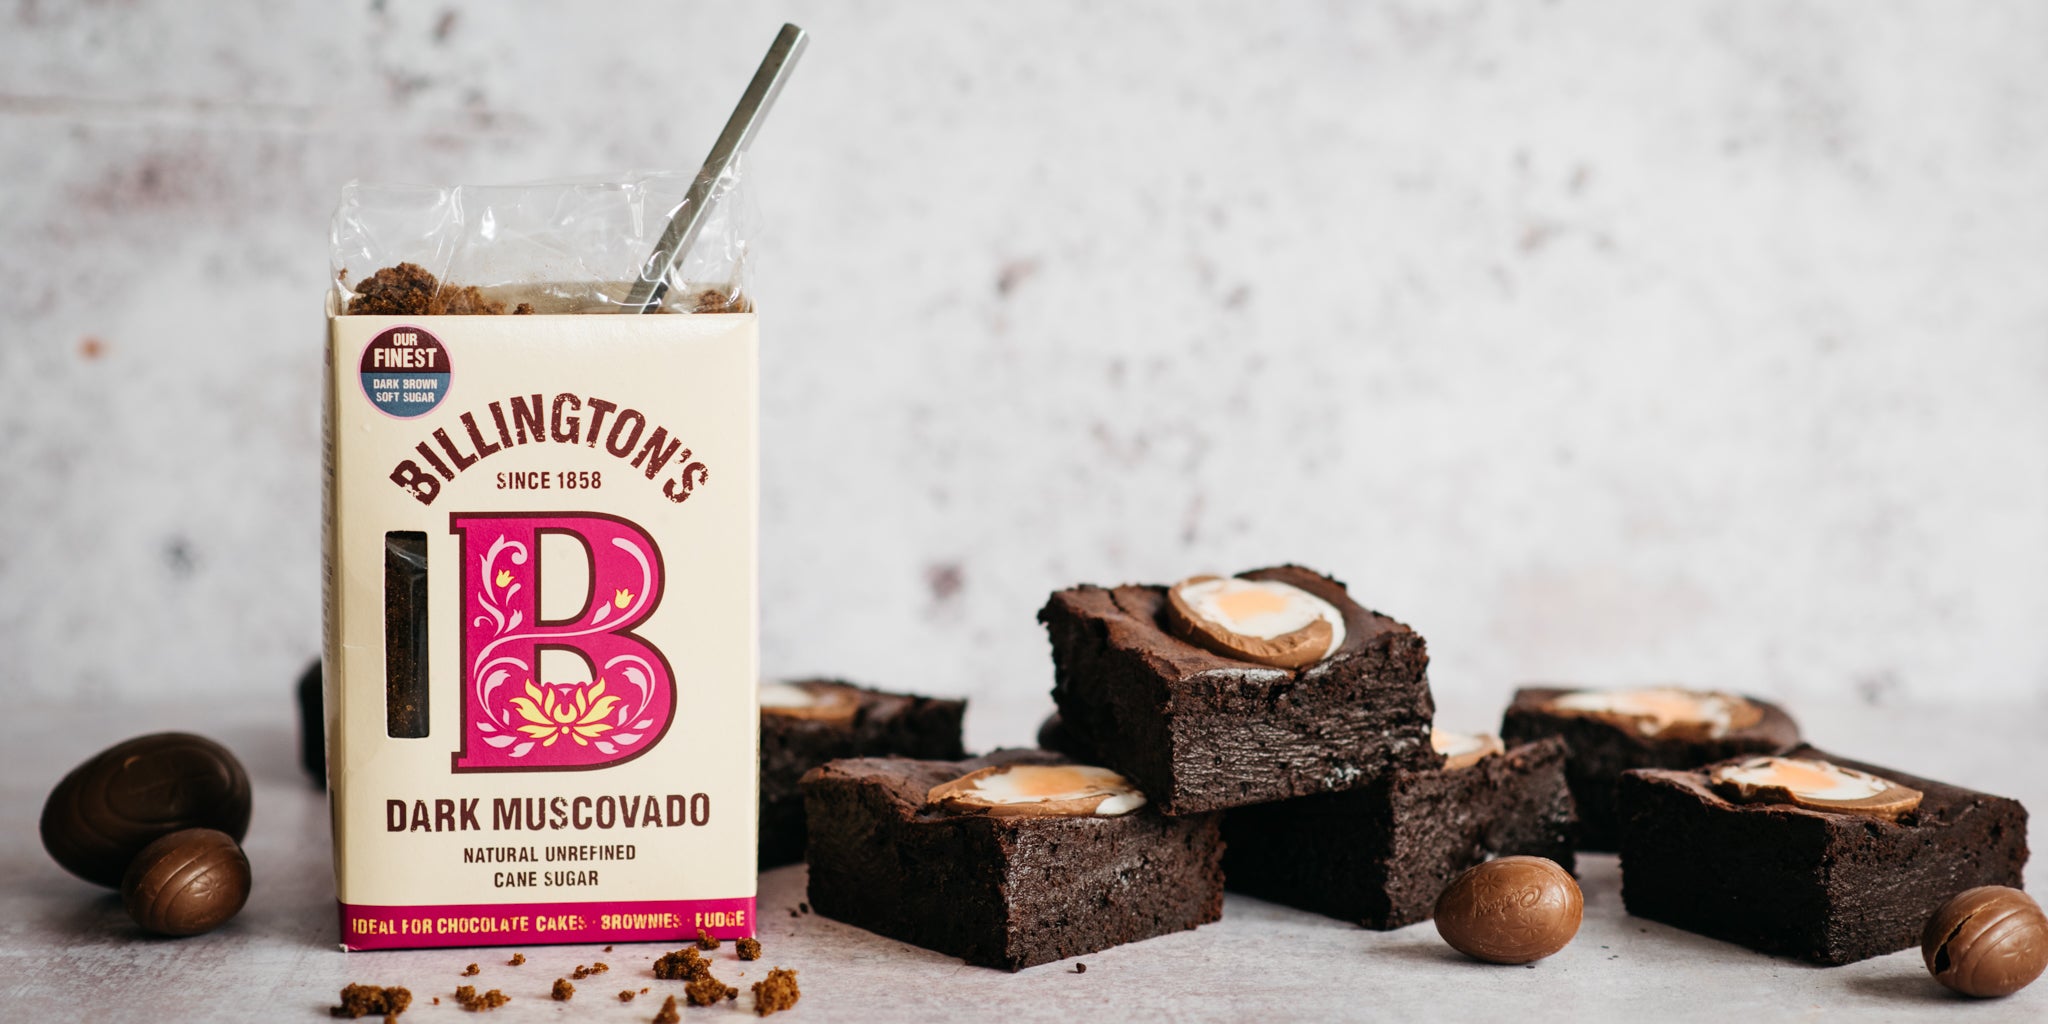 Stacked brownies beside an open pack of Billington's sugar